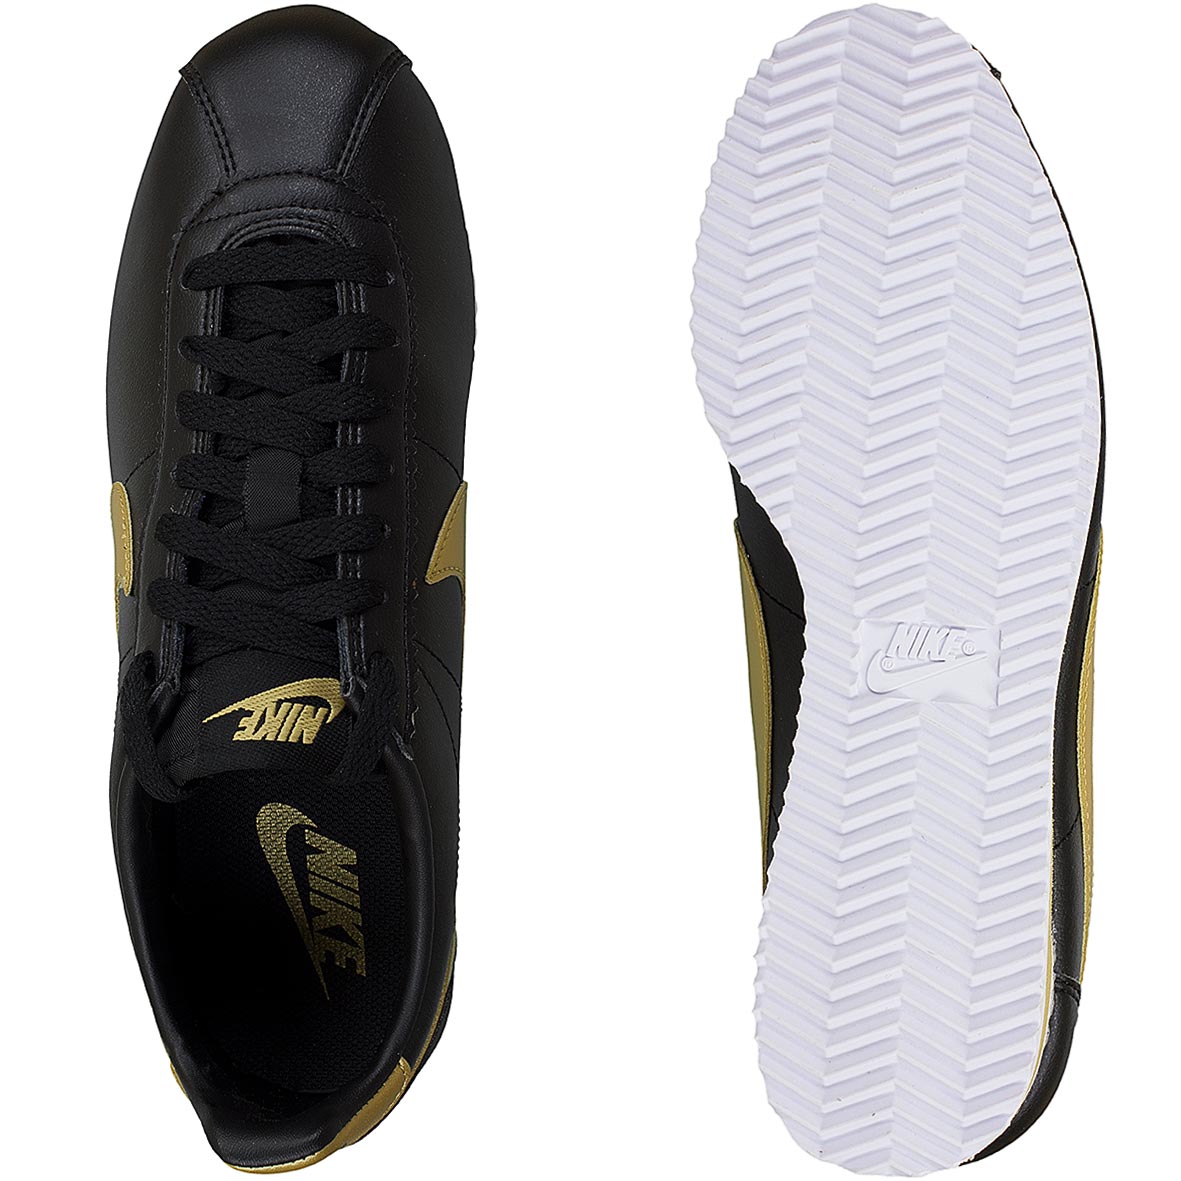 ☆ Nike Damen Sneaker Classic Cortez Leather schwarz/gold - hier bestellen!